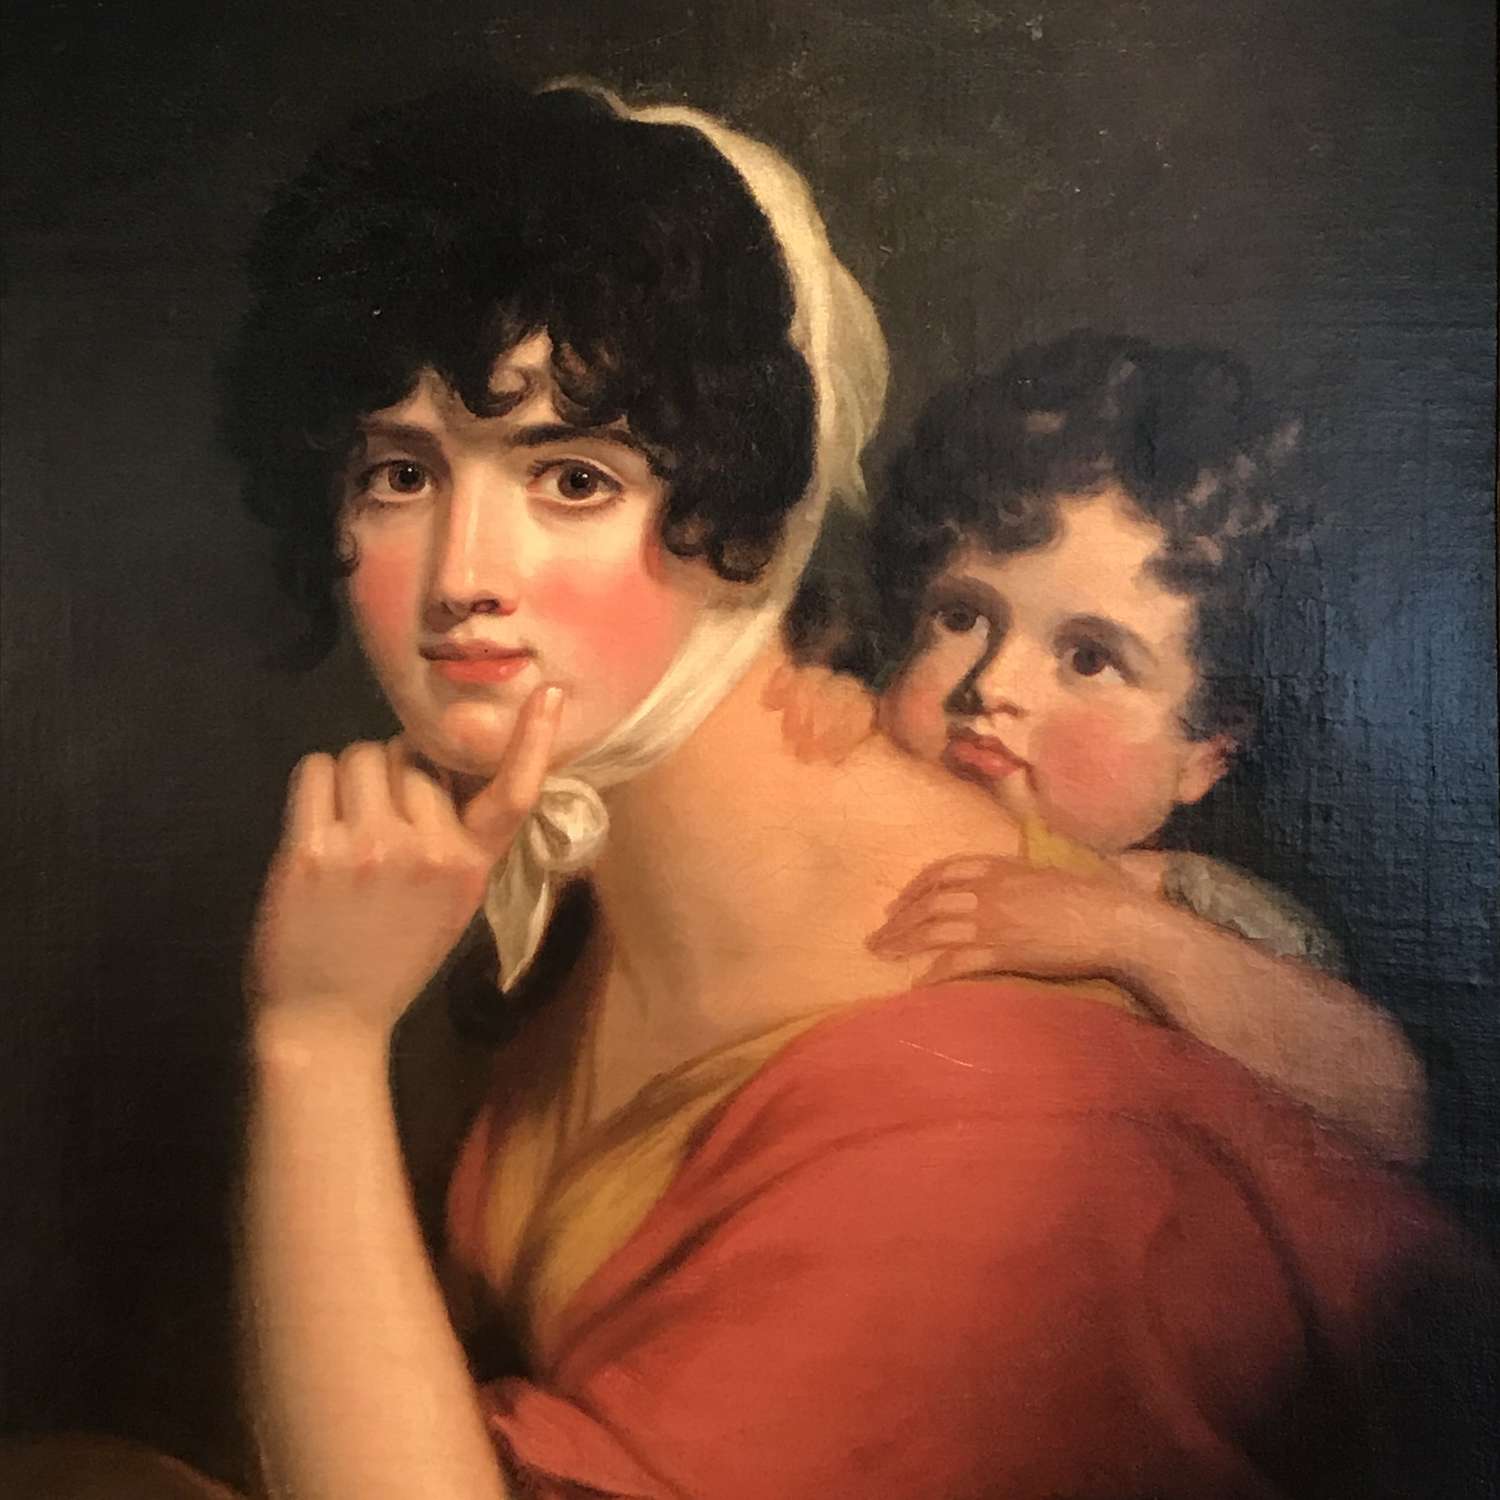 18th century Romantic portrait by Samuel Woodford RA